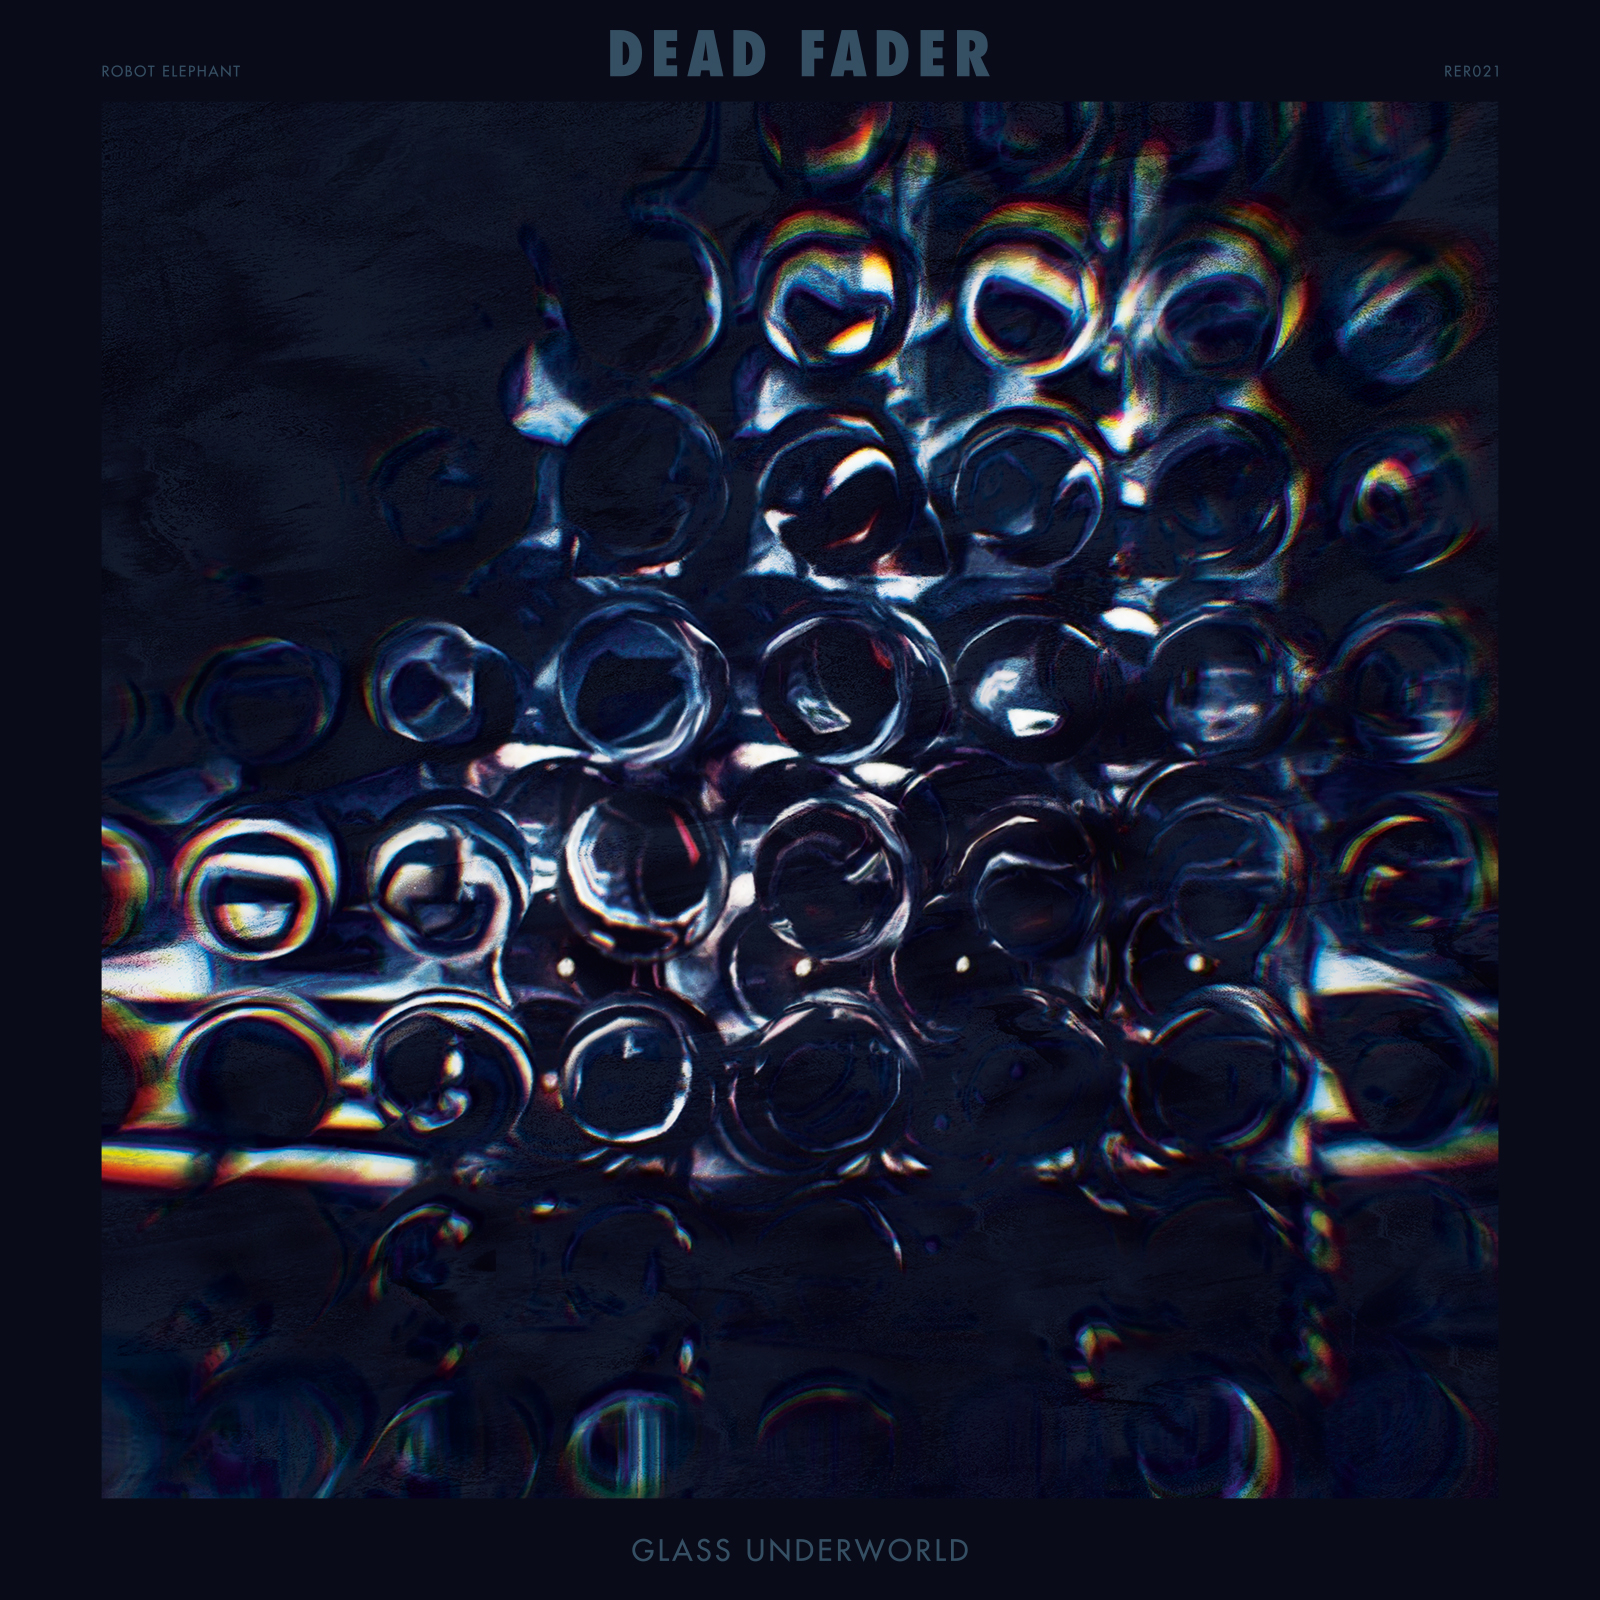 000-Dead Fader-Glass Underworld- [RER021]